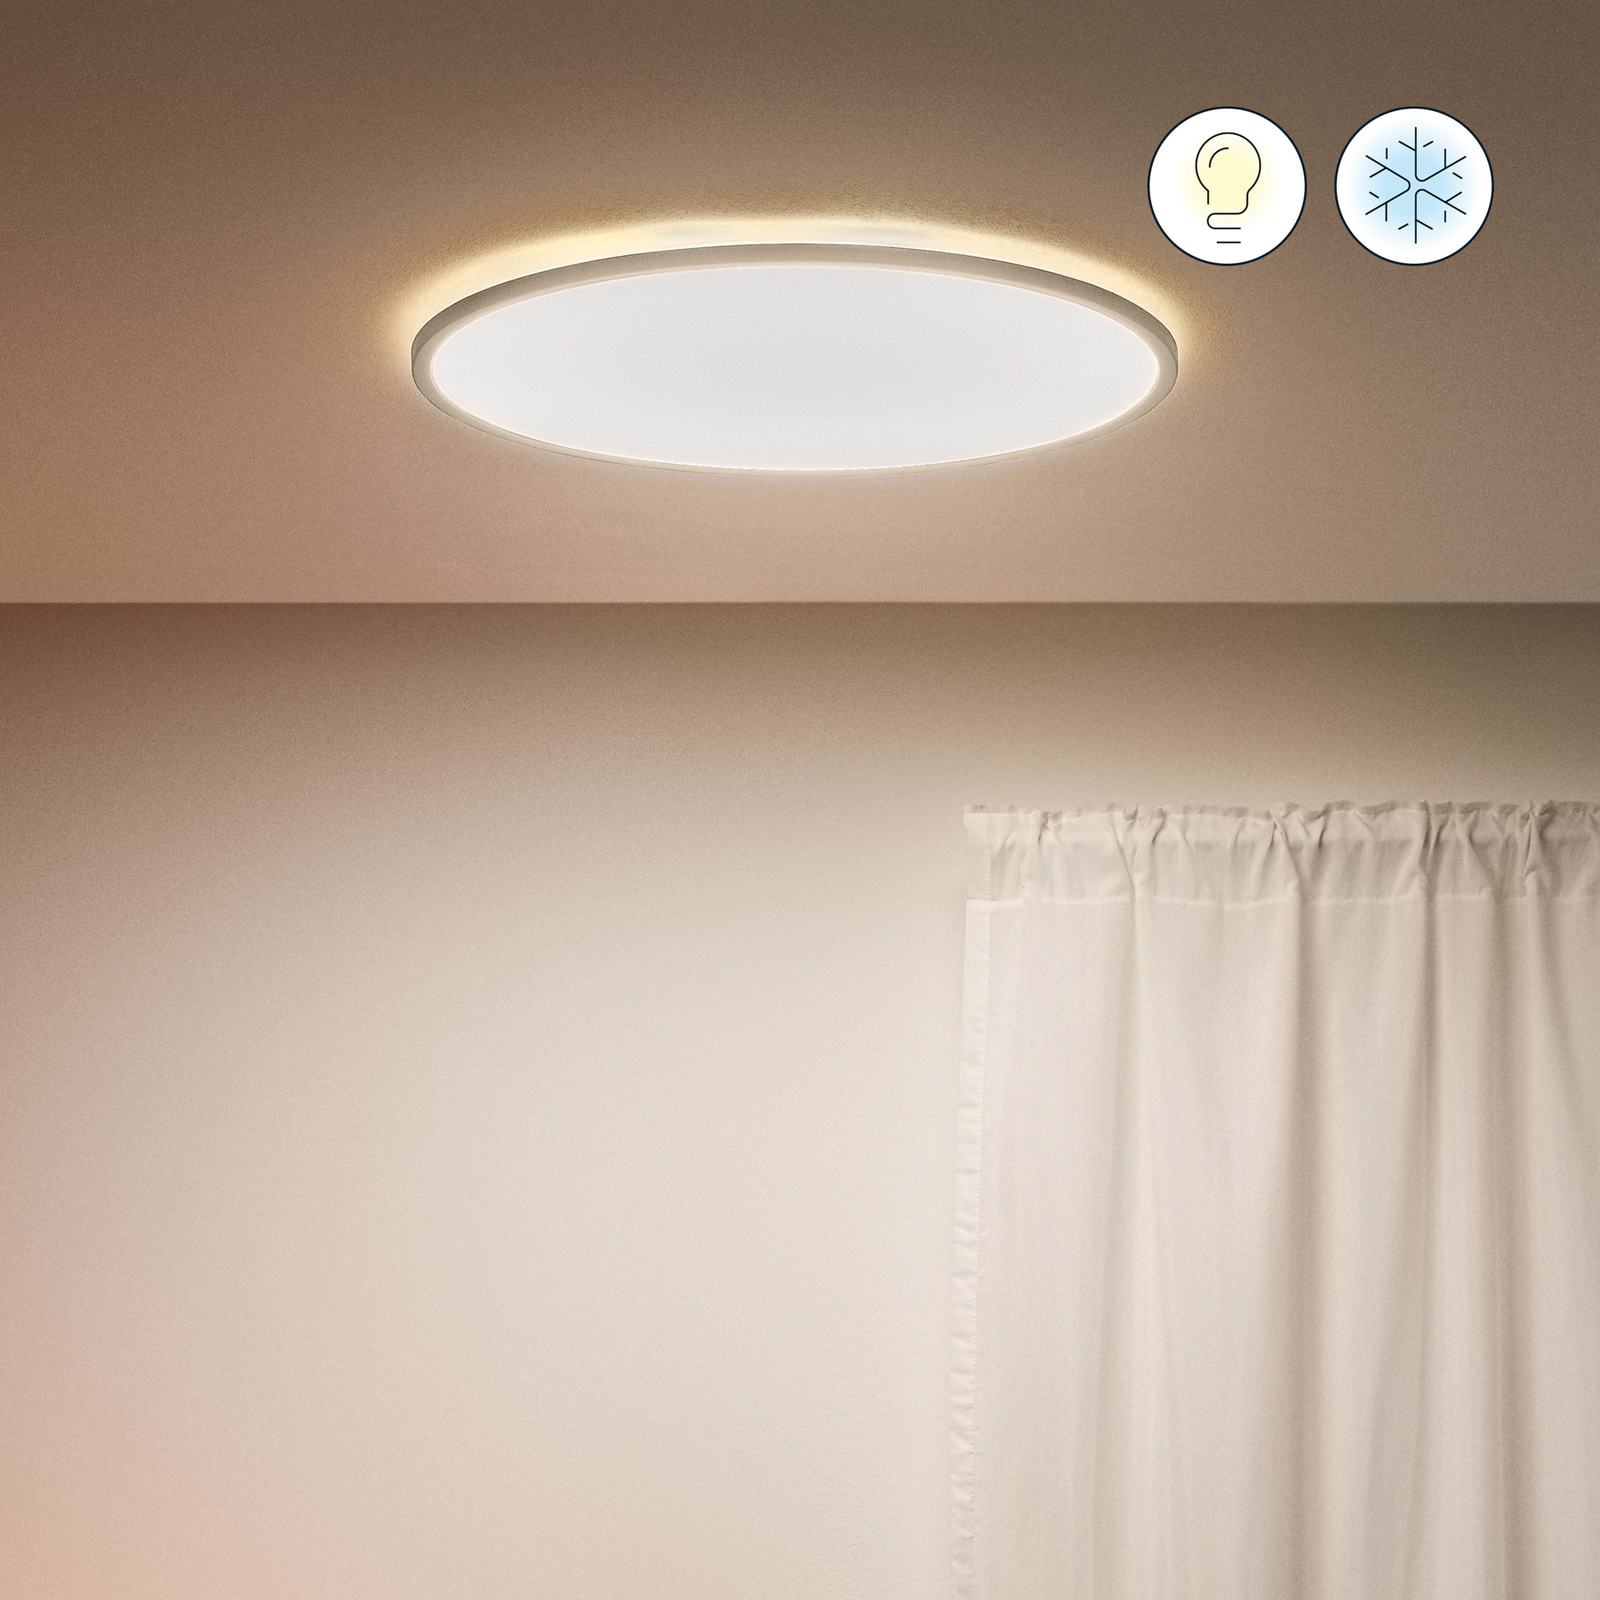 WiZ SuperSlim LED stropna svetilka CCT Ø55cm bela